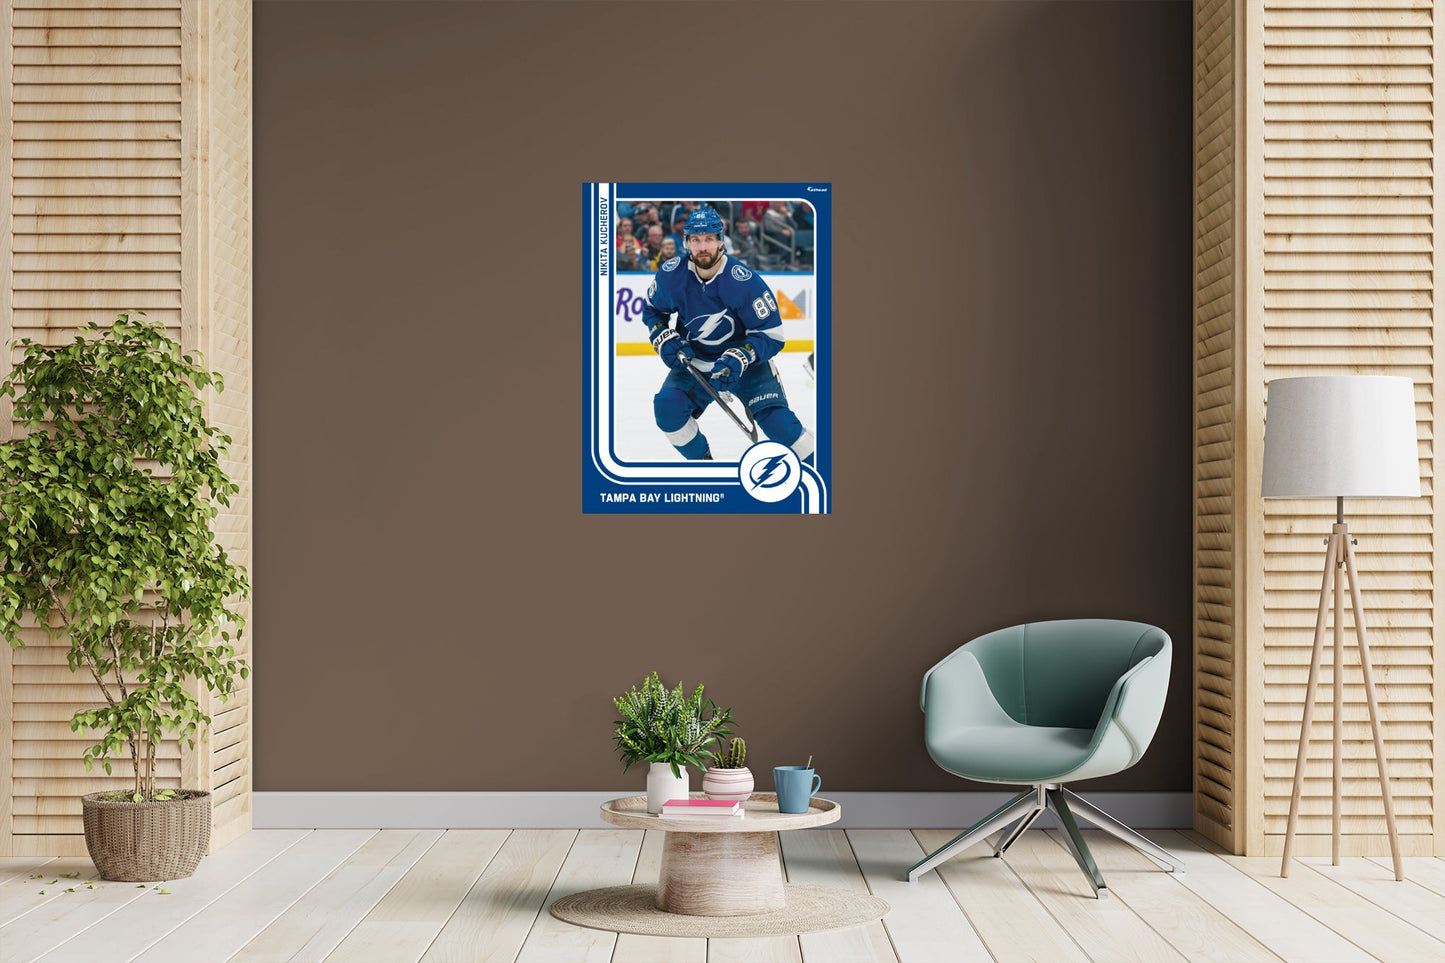 Tampa Bay Lightning: Nikita Kucherov Poster - Officially Licensed NHL Removable Adhesive Decal